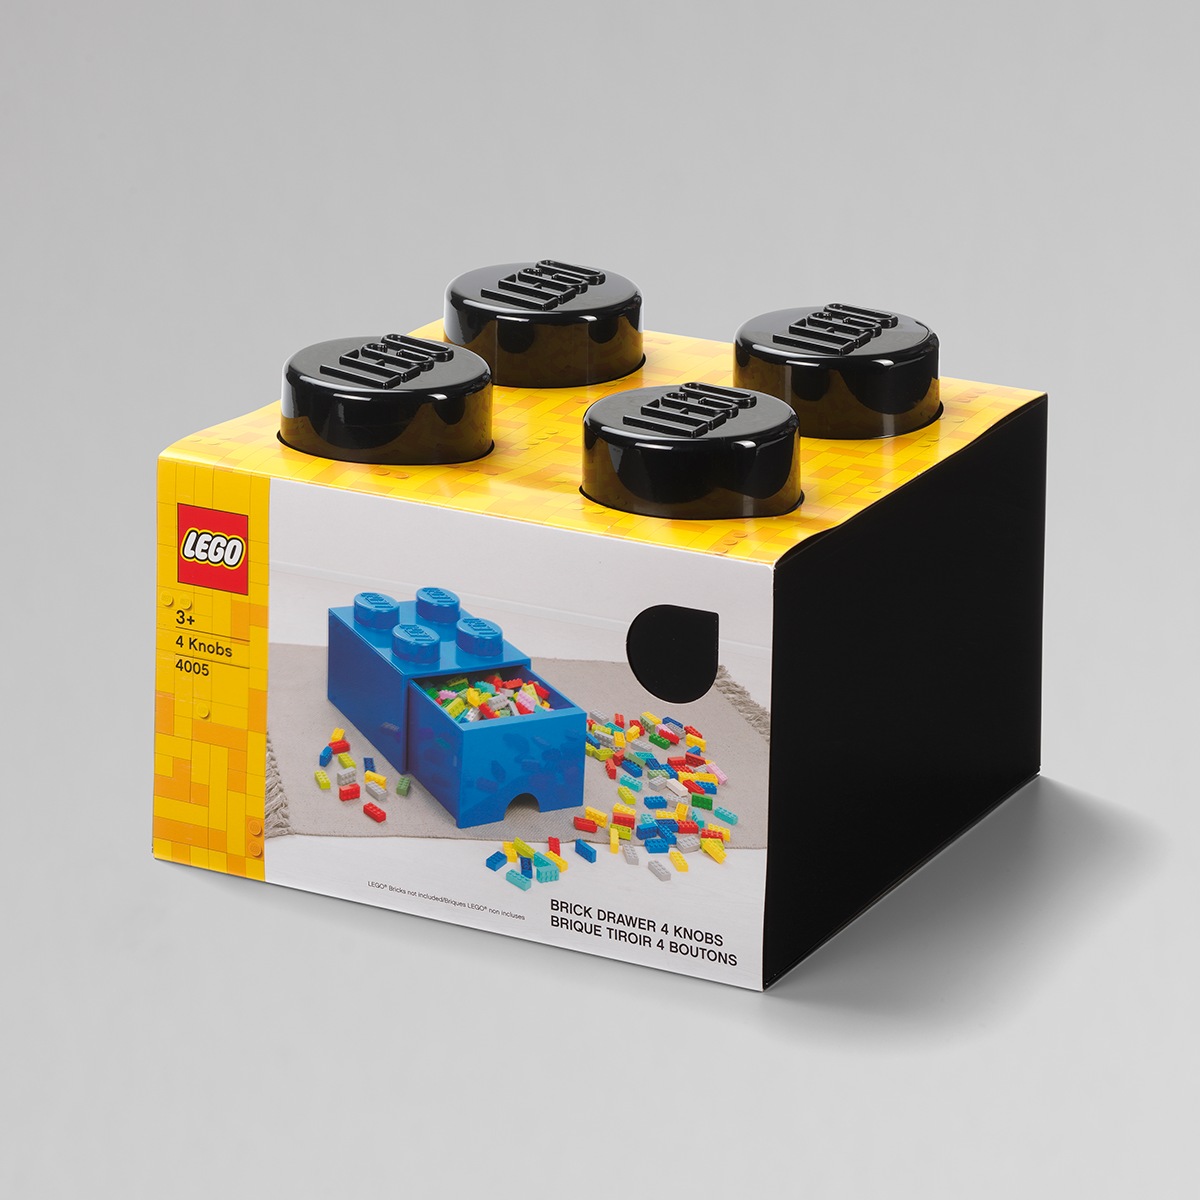 https://royaldesign.com/image/2/room-copenhagen-lego-drawer-4-knobs-3?w=800&quality=80